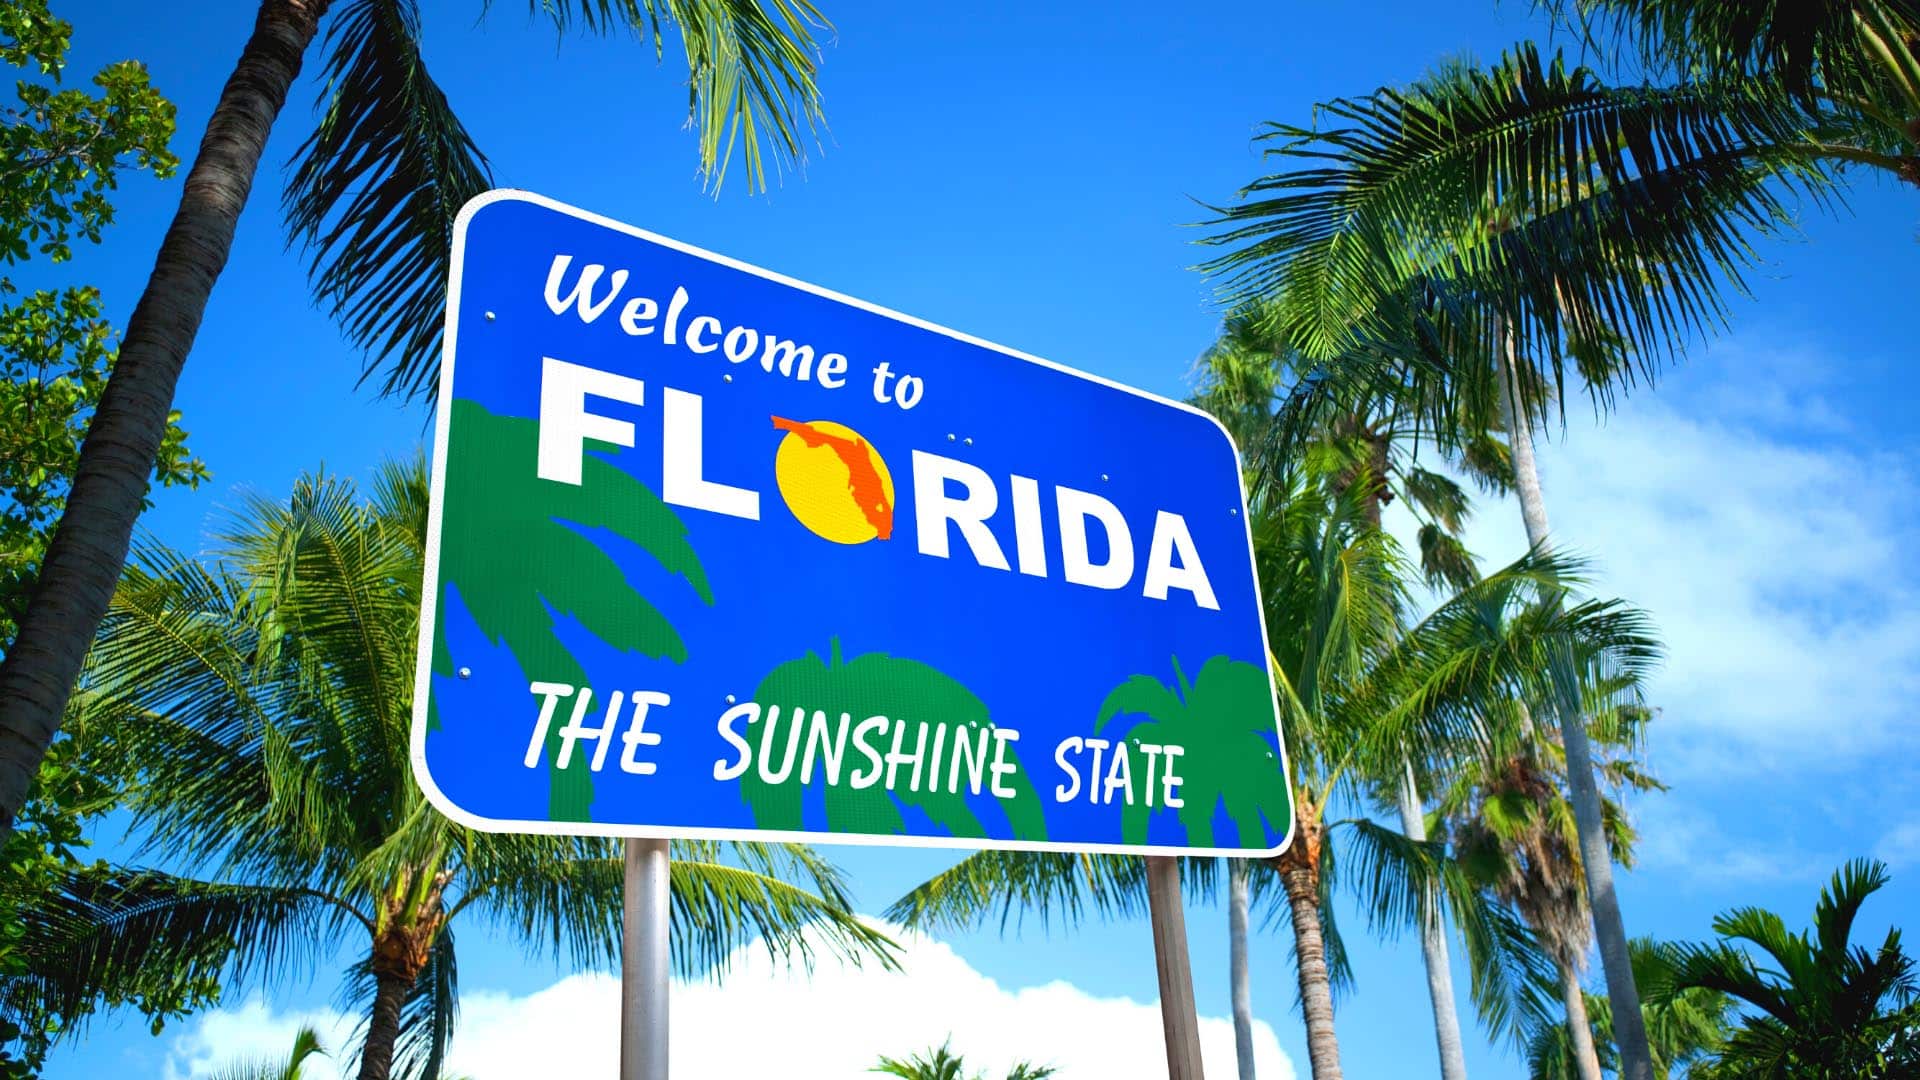 Florida, the Sunshine state